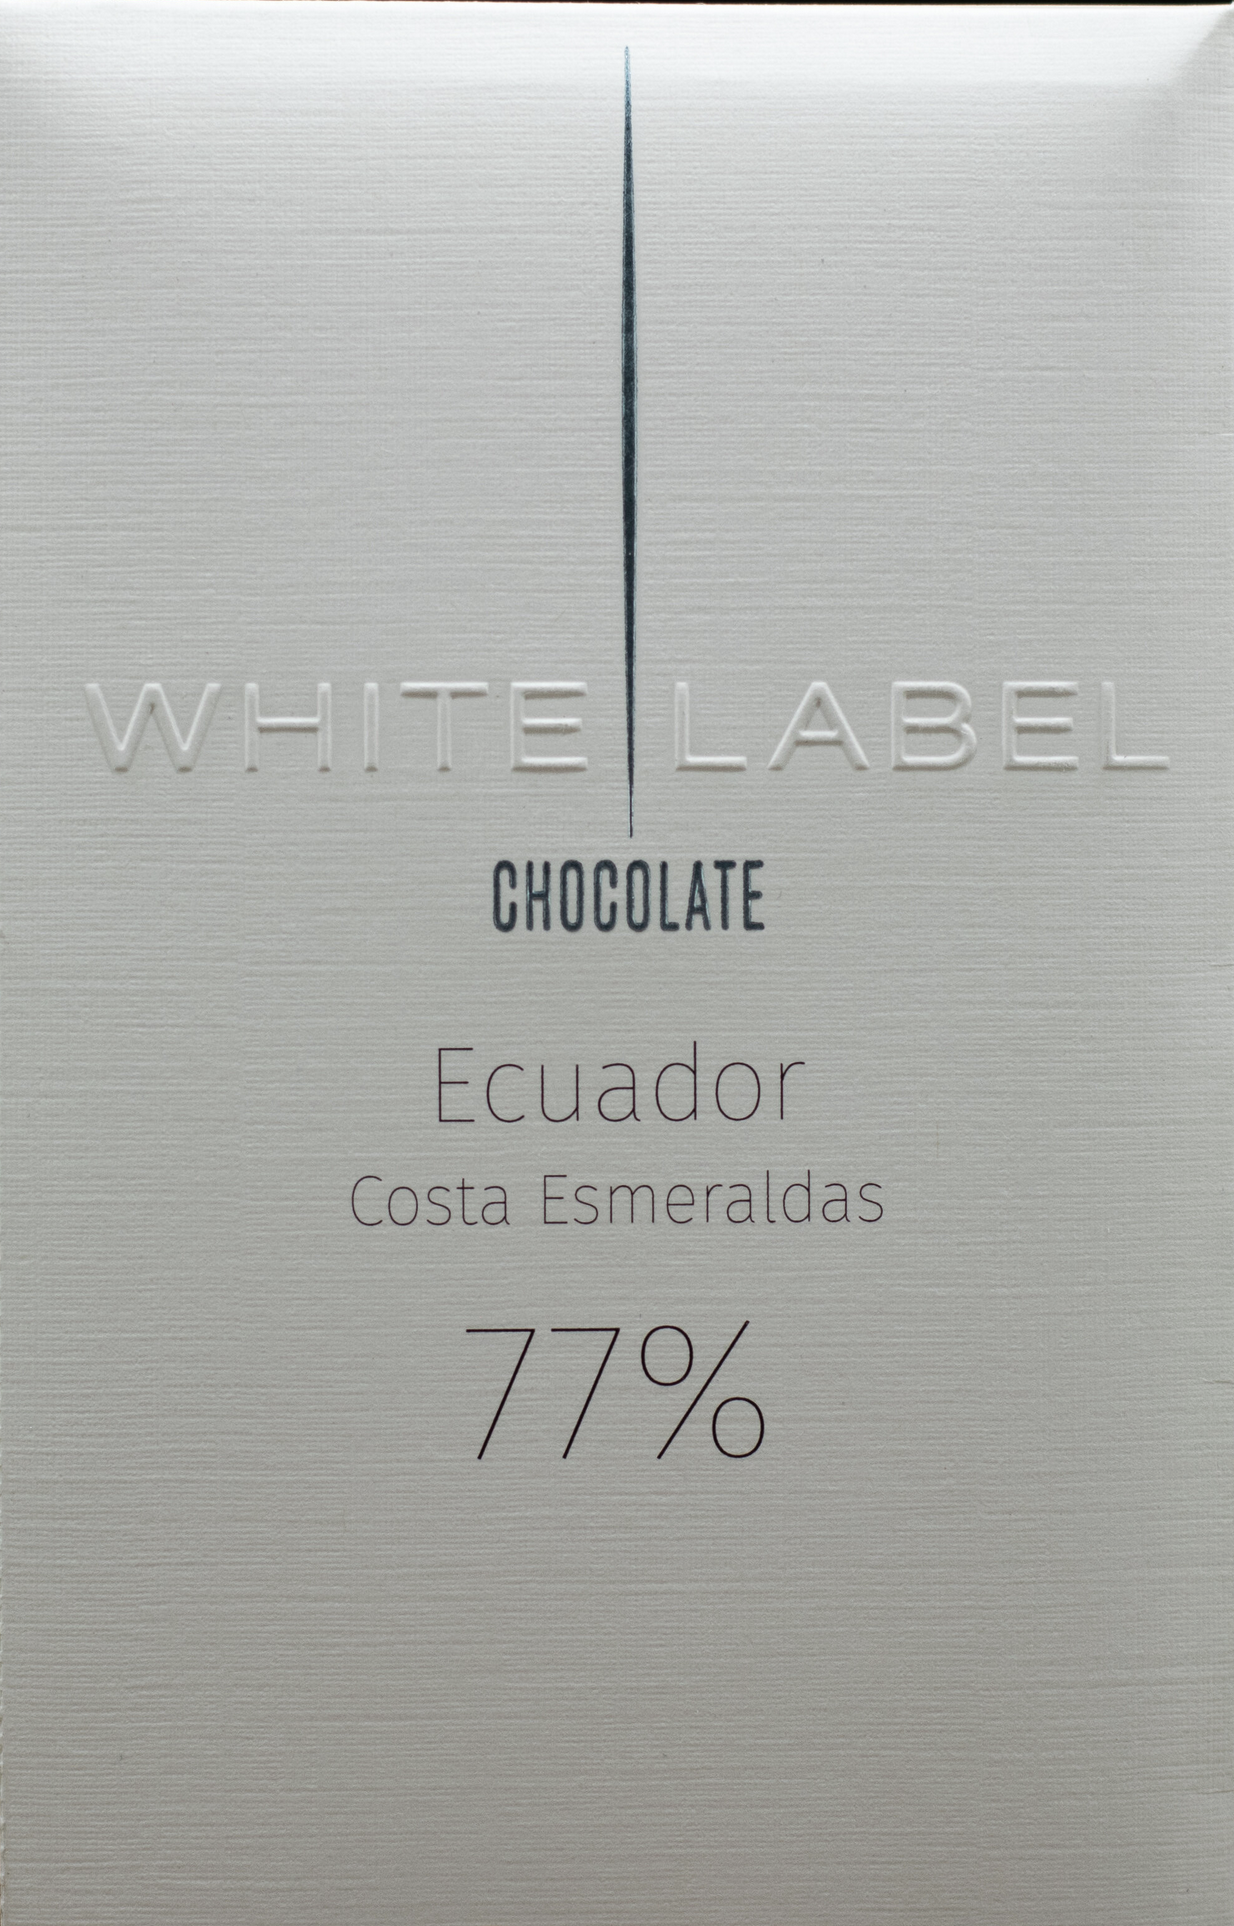 WHITE LABEL Chocolate | Dunkle Schokolade »Ecuador - Costa Esmeraldas« 77% | 65g